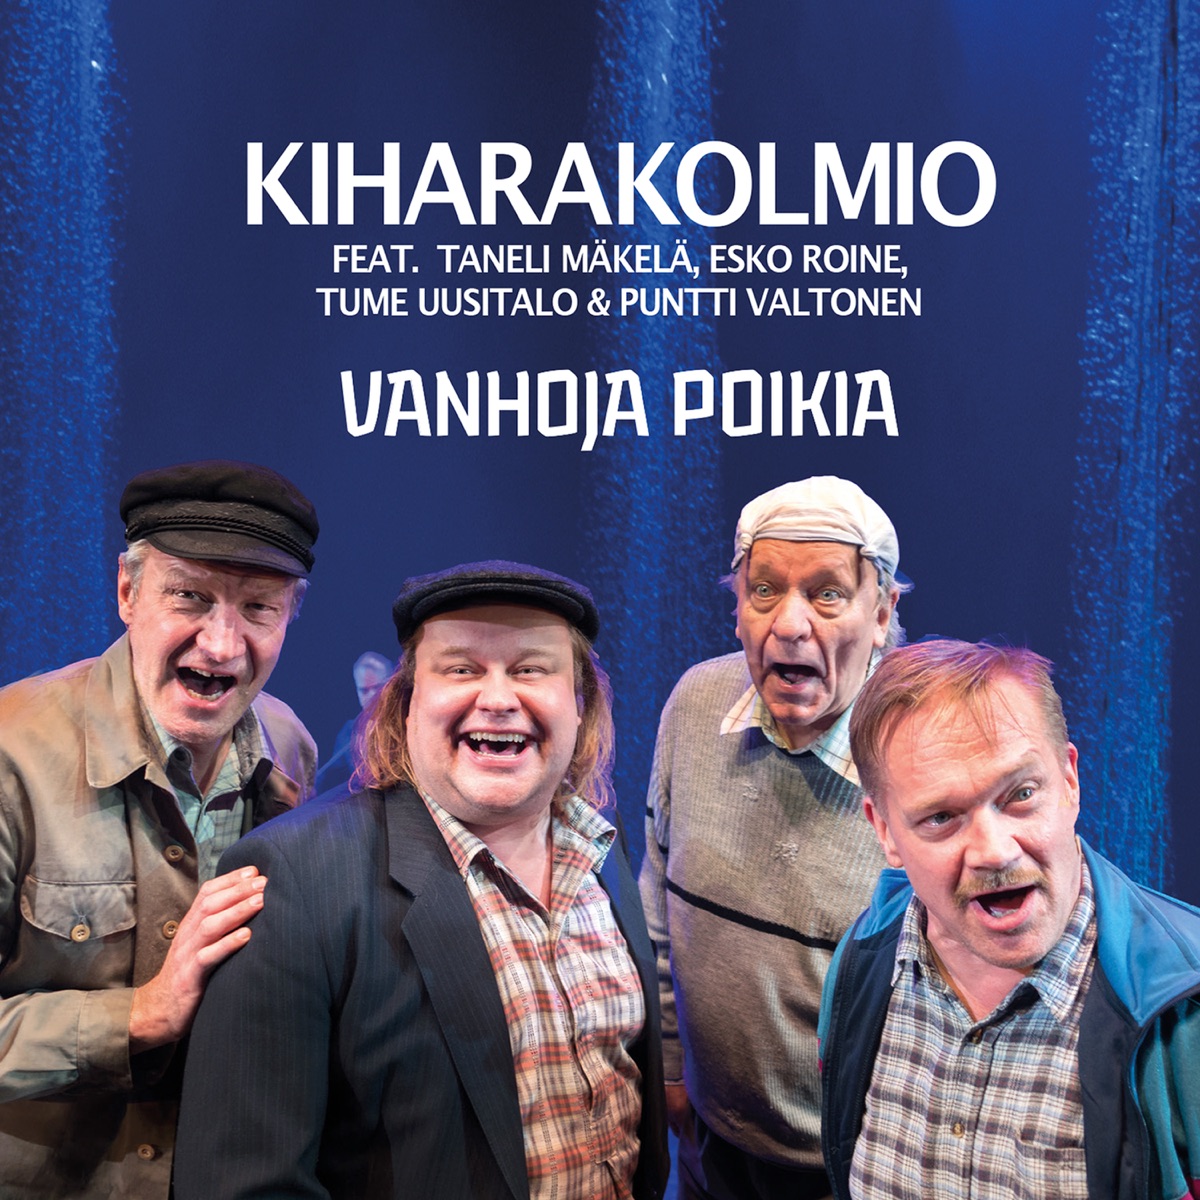 Vanhoja Poikia - Album by Kiharakolmio - Apple Music